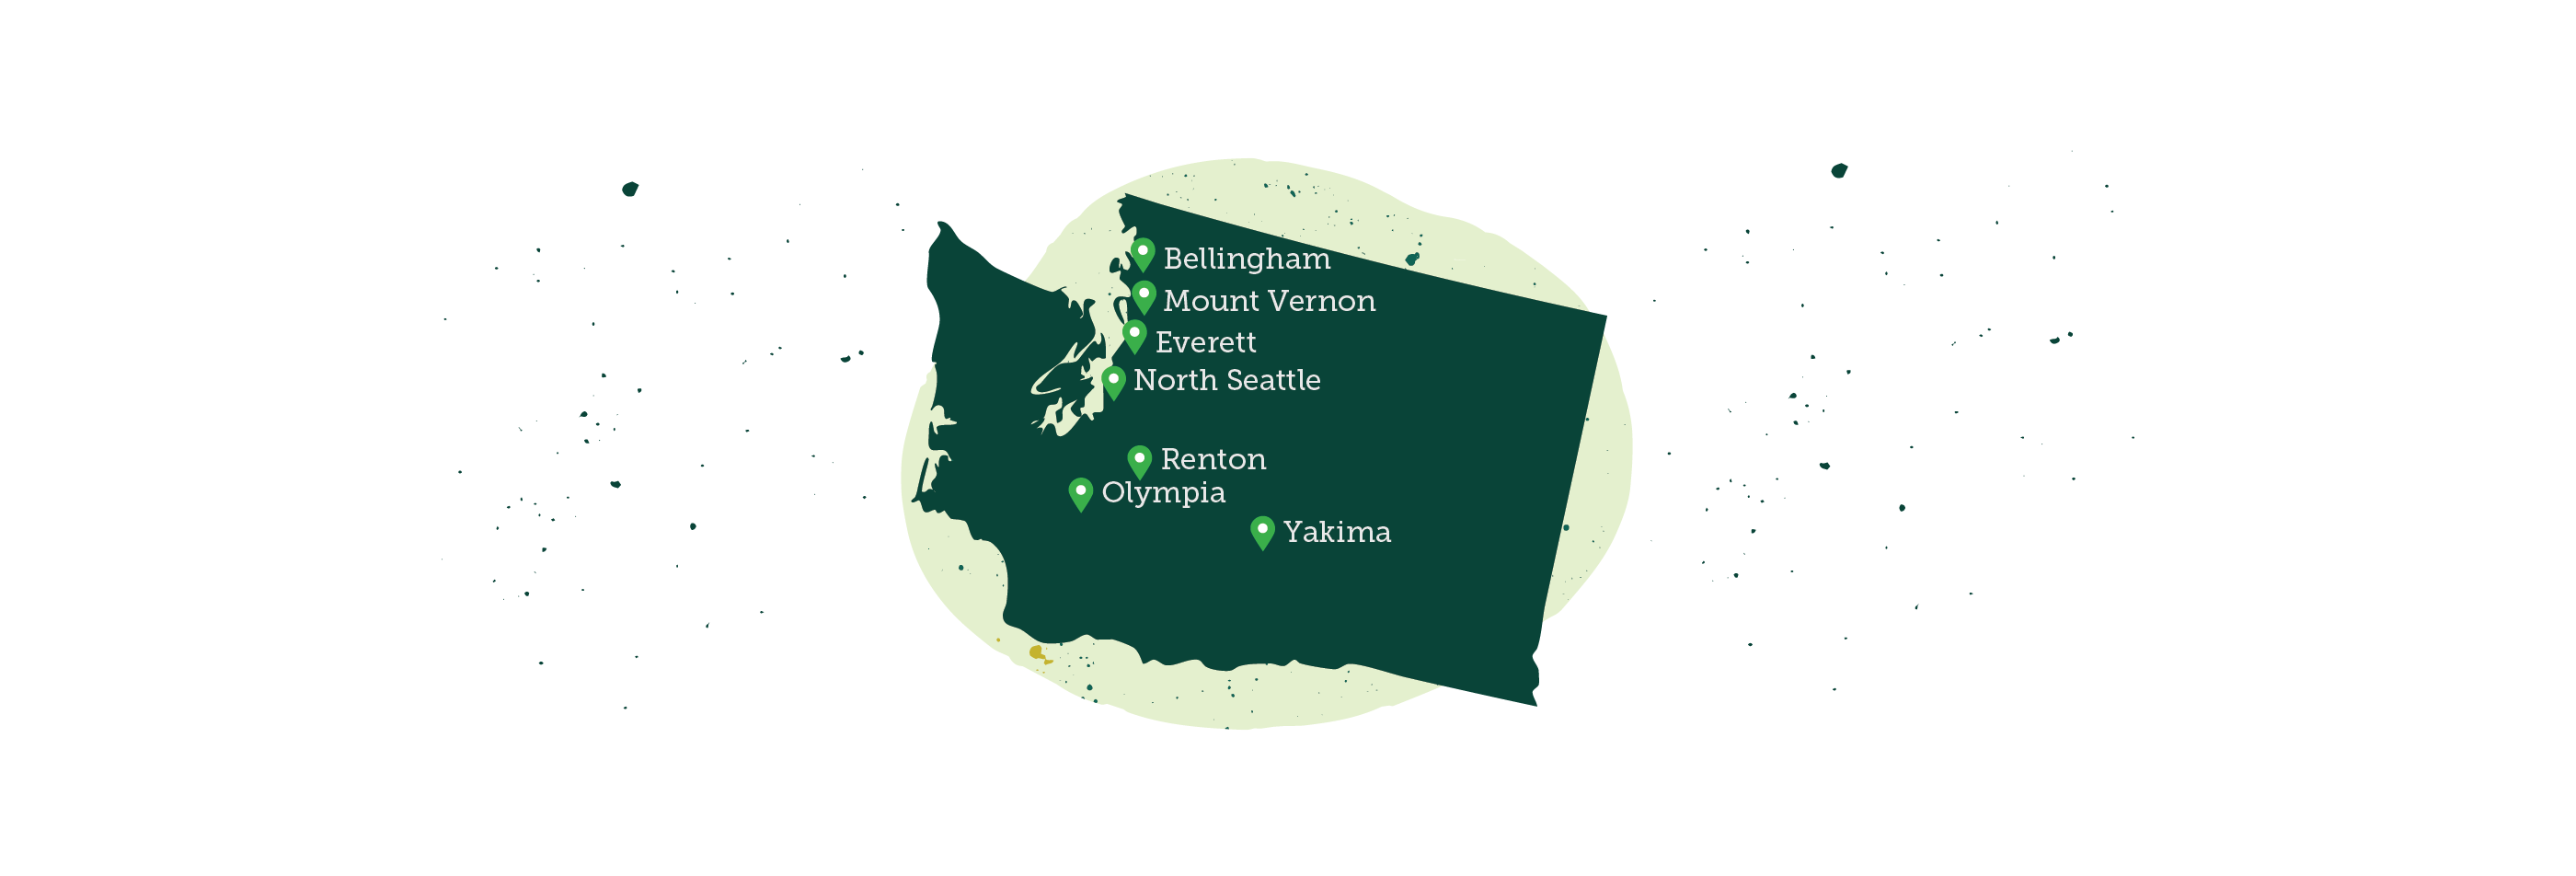 Stylized map of Washington showing Evergreen locations